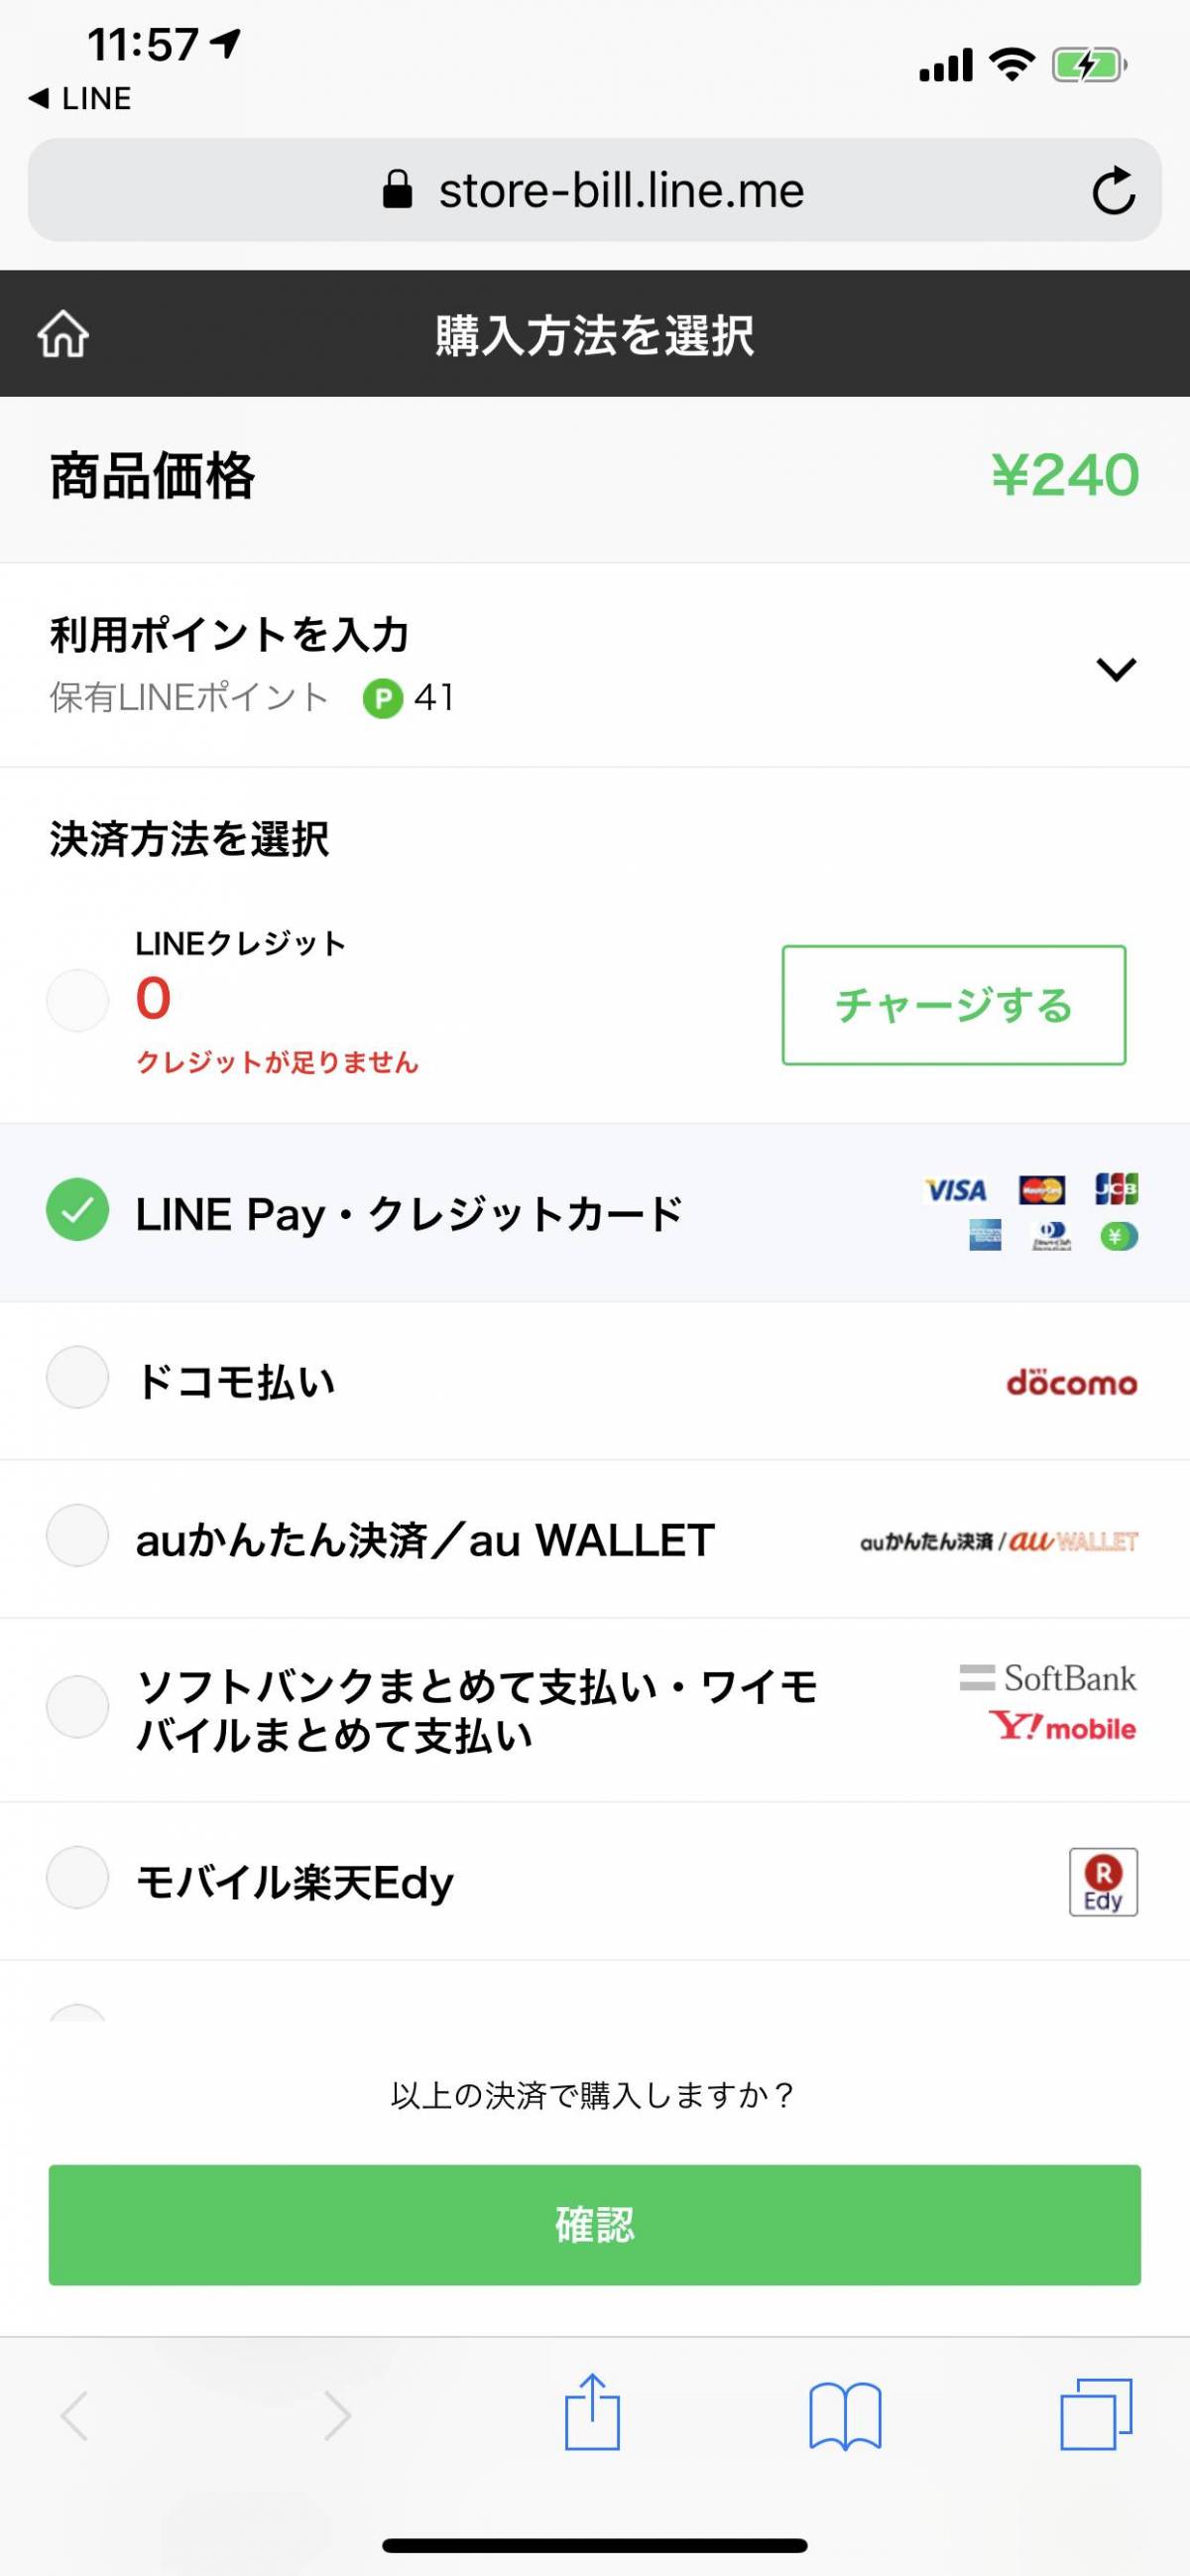 Line Store Line Pay決済でスタンプ マンガコイン ゲームアイテムが実質1円 5 2までの画像 2枚目 Appliv Topics